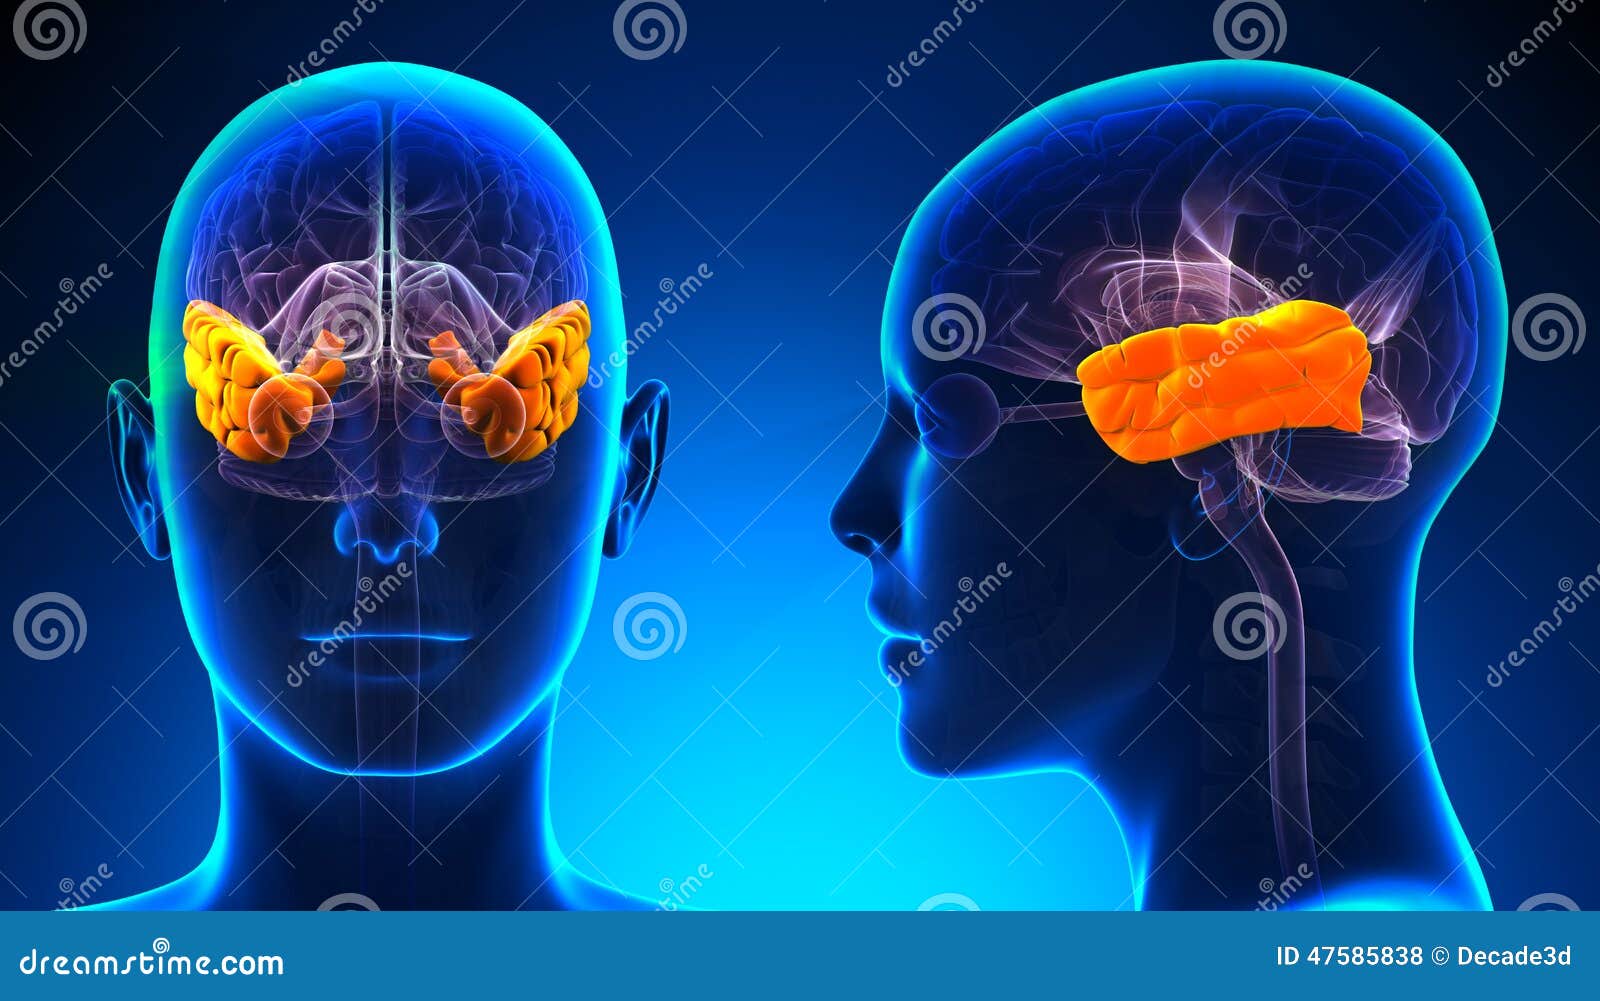 female temporal lobe brain anatomy - blue concept